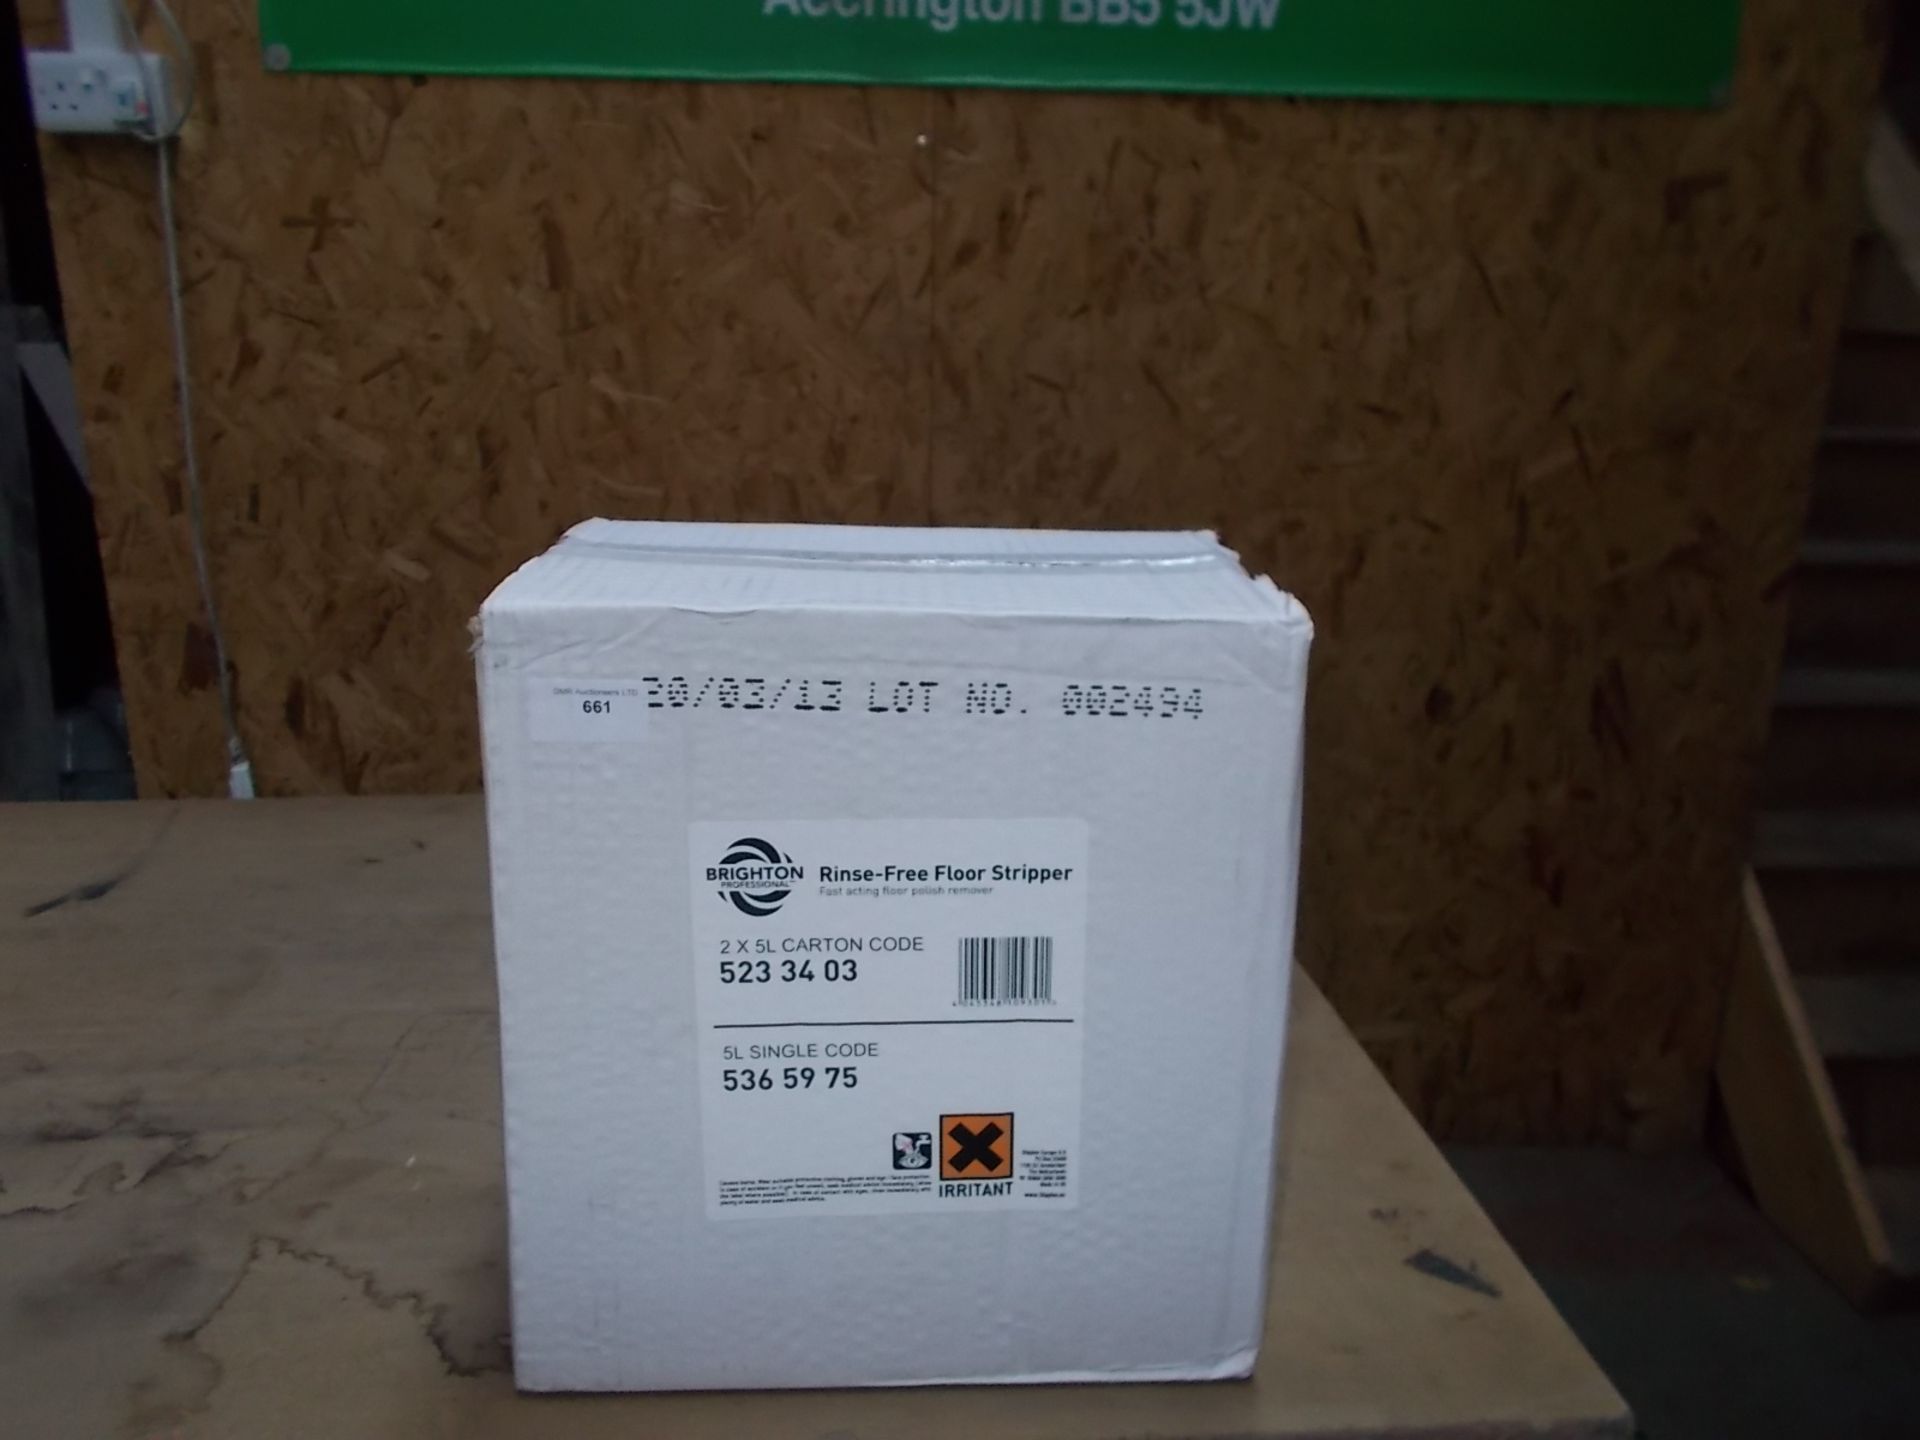 1 BRAND NEW BOX OF 2 X 5LITRE OF BRIGHTON PROFESSIONAL RINSE-FREE FLOOR STRIPPER (NO VAT)